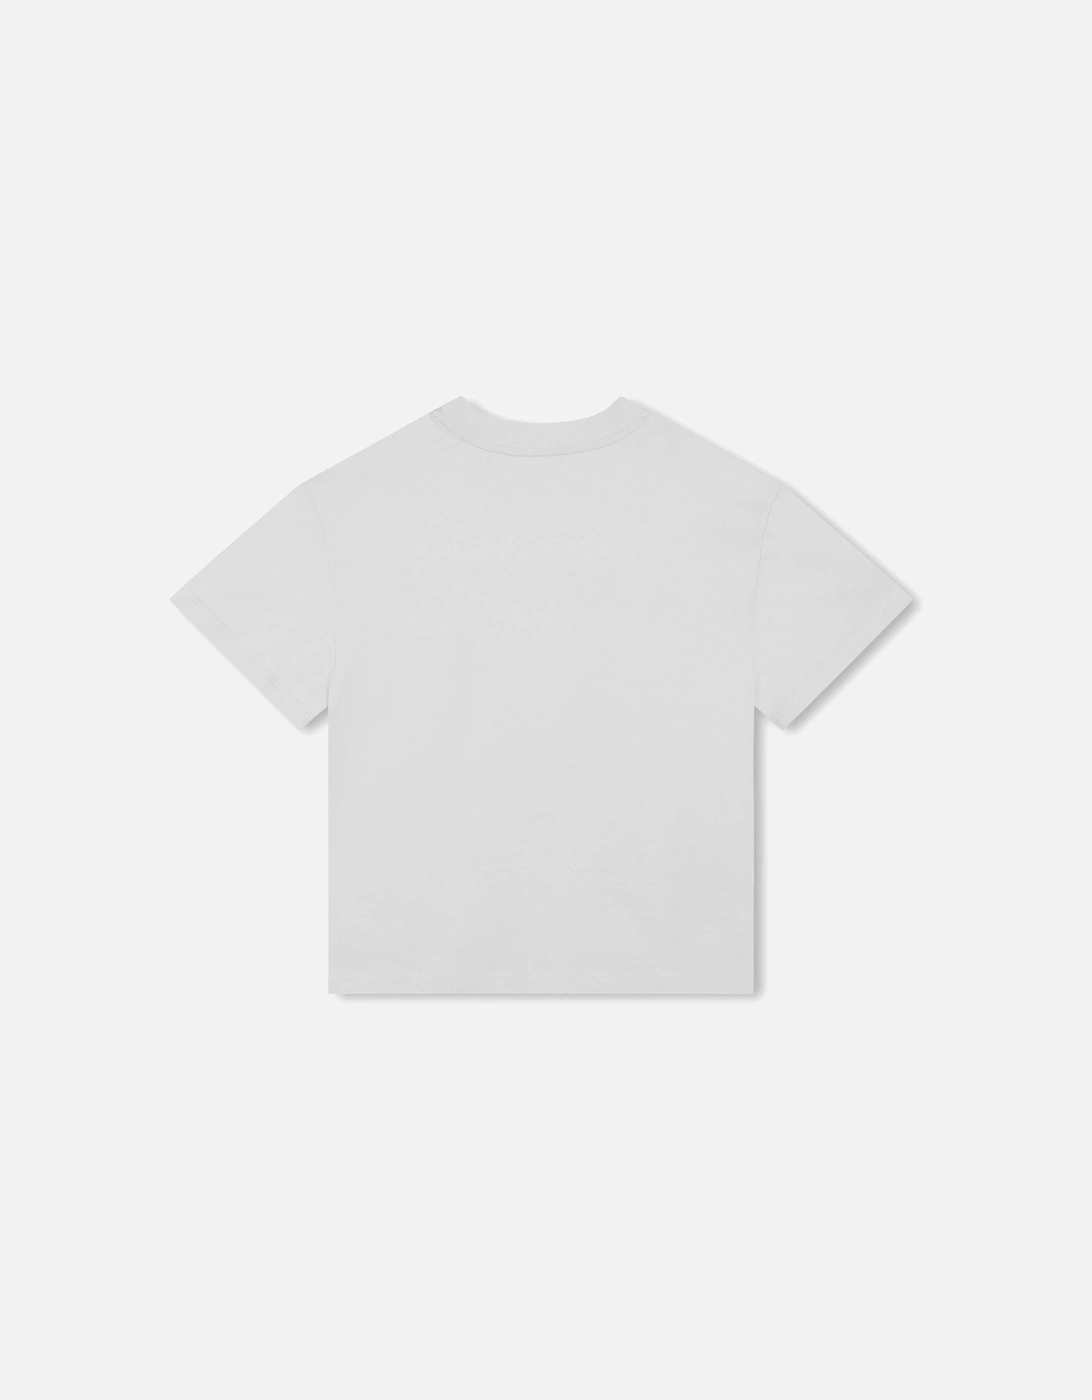 Boys White Cotton Logo T-Shirt